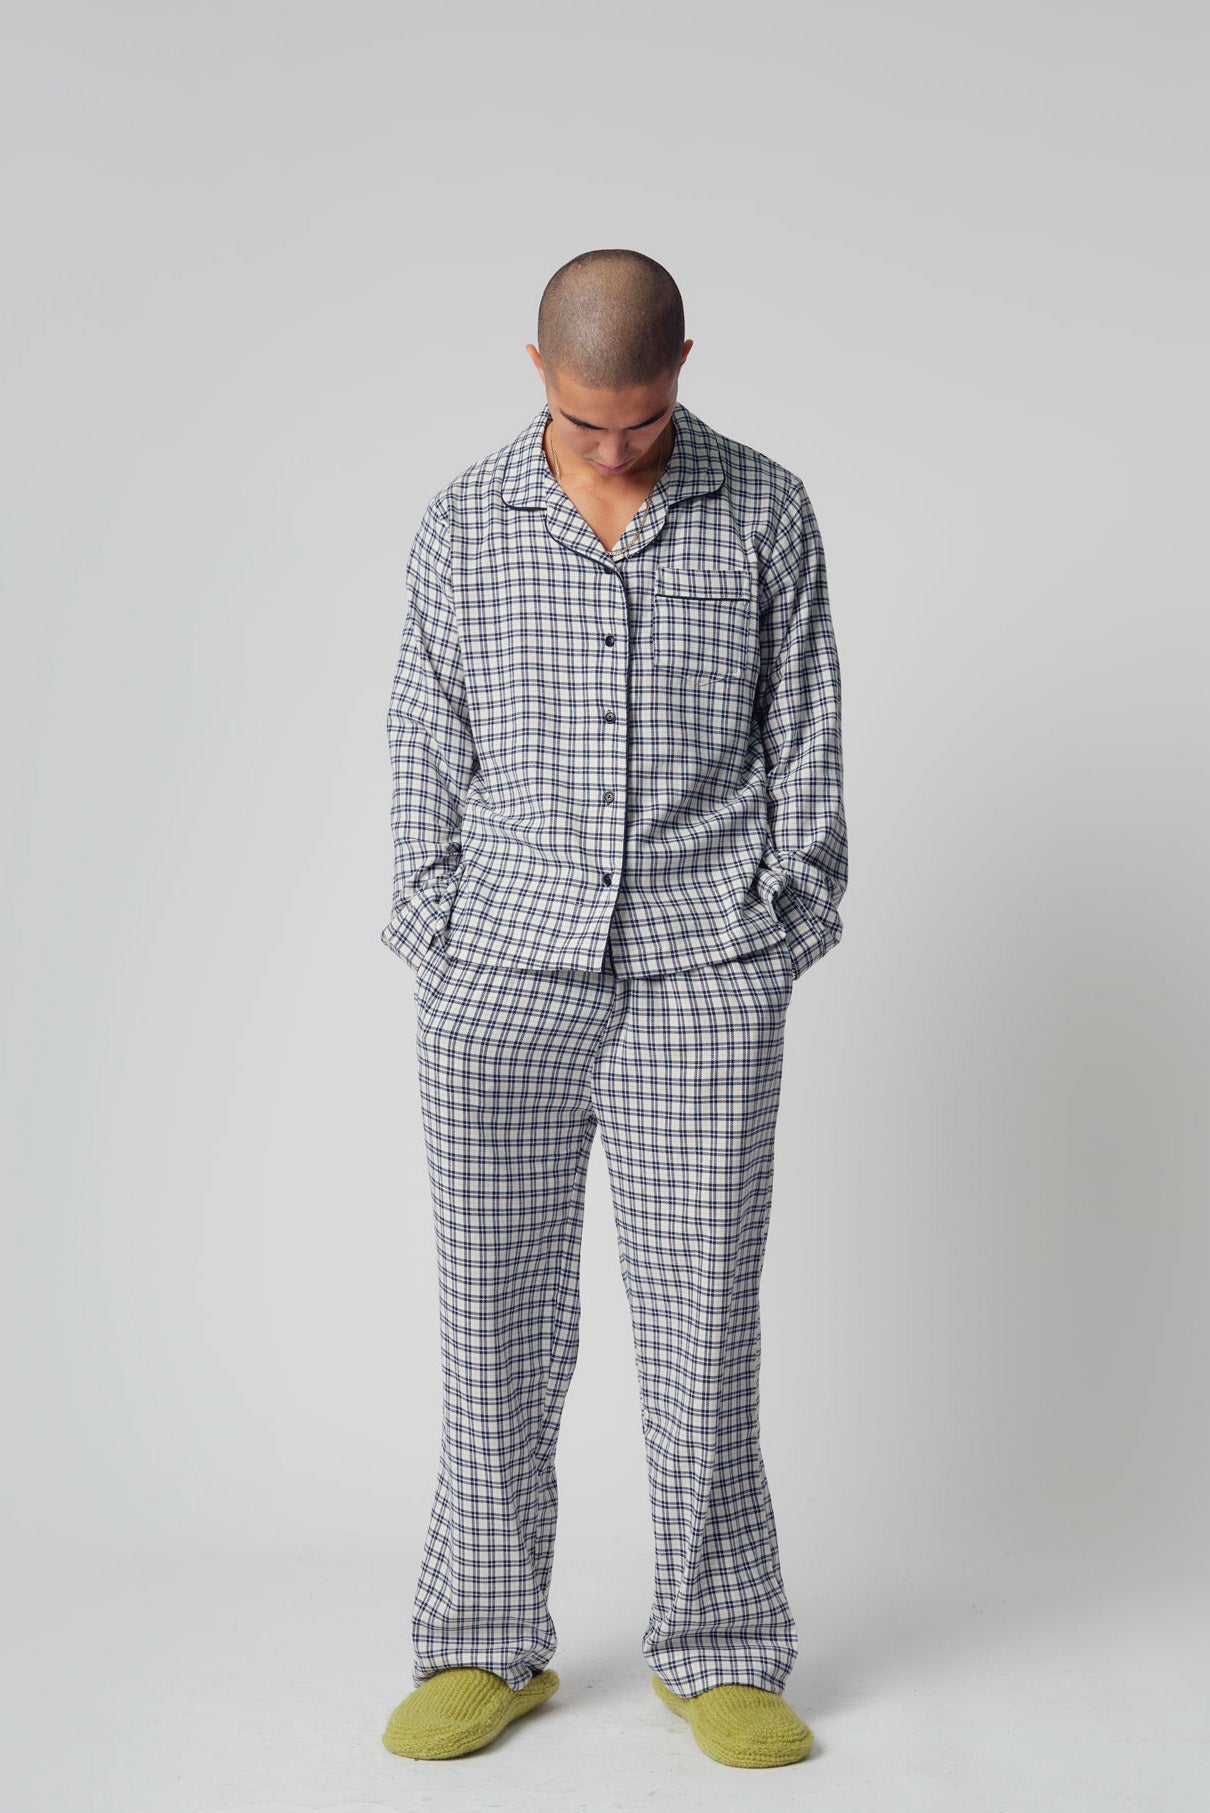 JIM JAM Mens Organic Cotton Pyjama Set White, Large